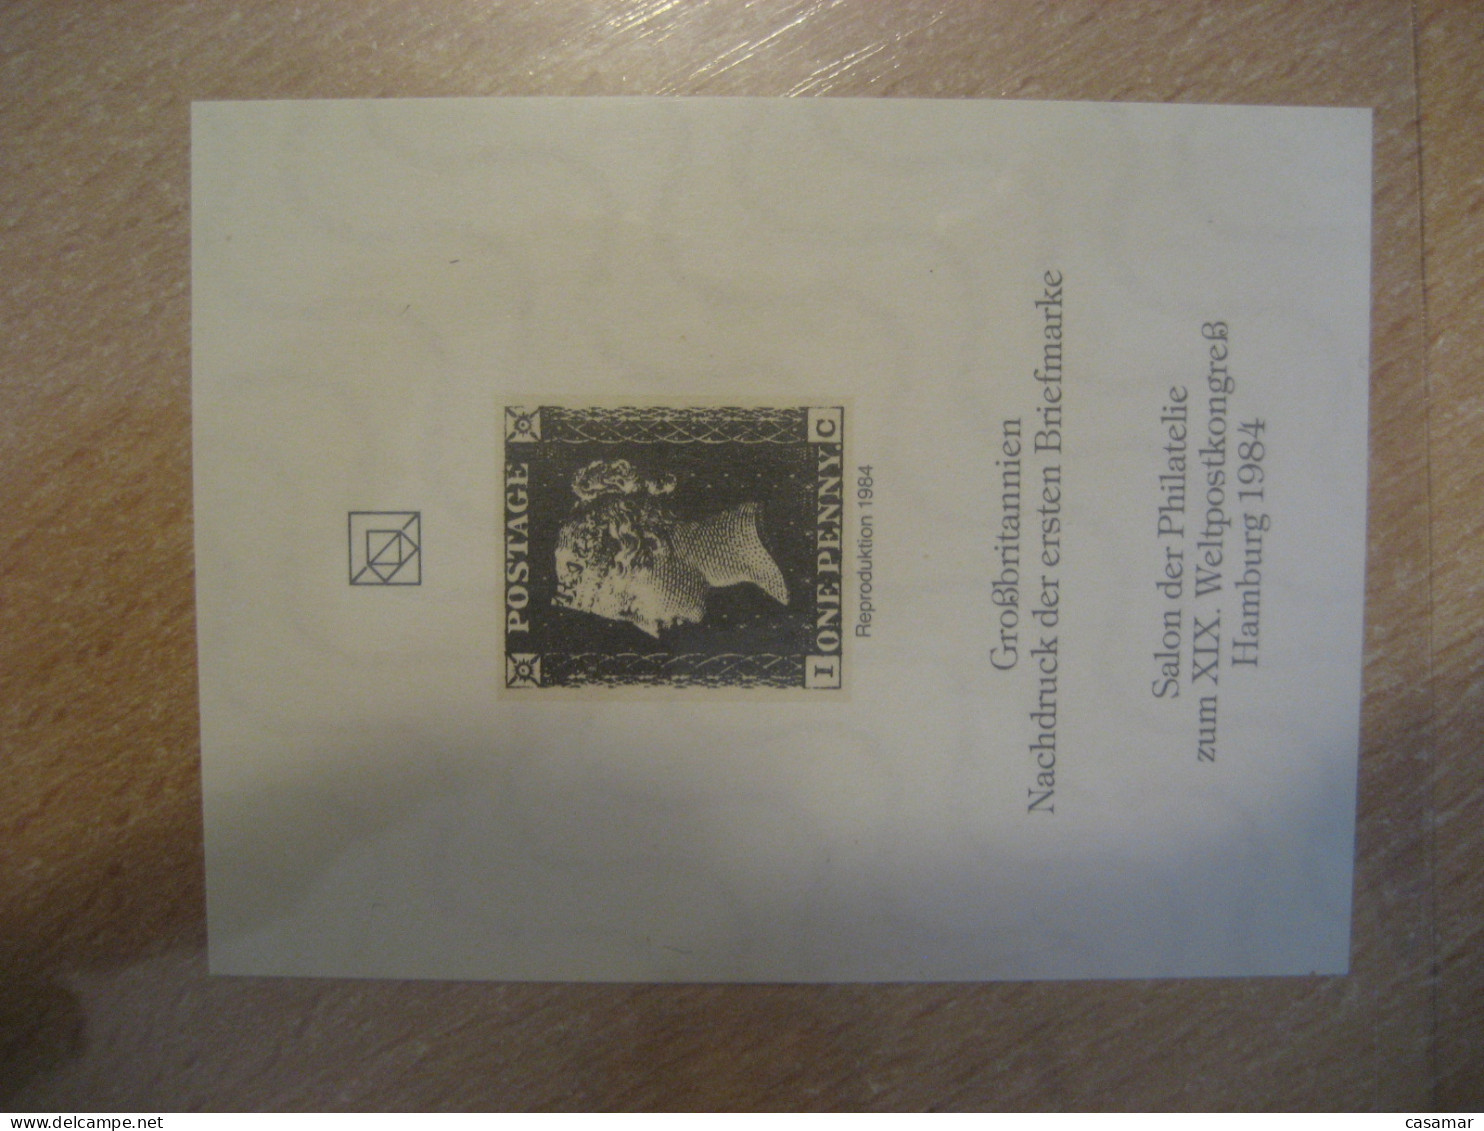 HAMBURG 1984 ENGLAND Great Britain One Penny GB Imperforated Reproduktion Proof Epreuve Nachdruck Poster Stamp GERMANY - Probe- Und Nachdrucke